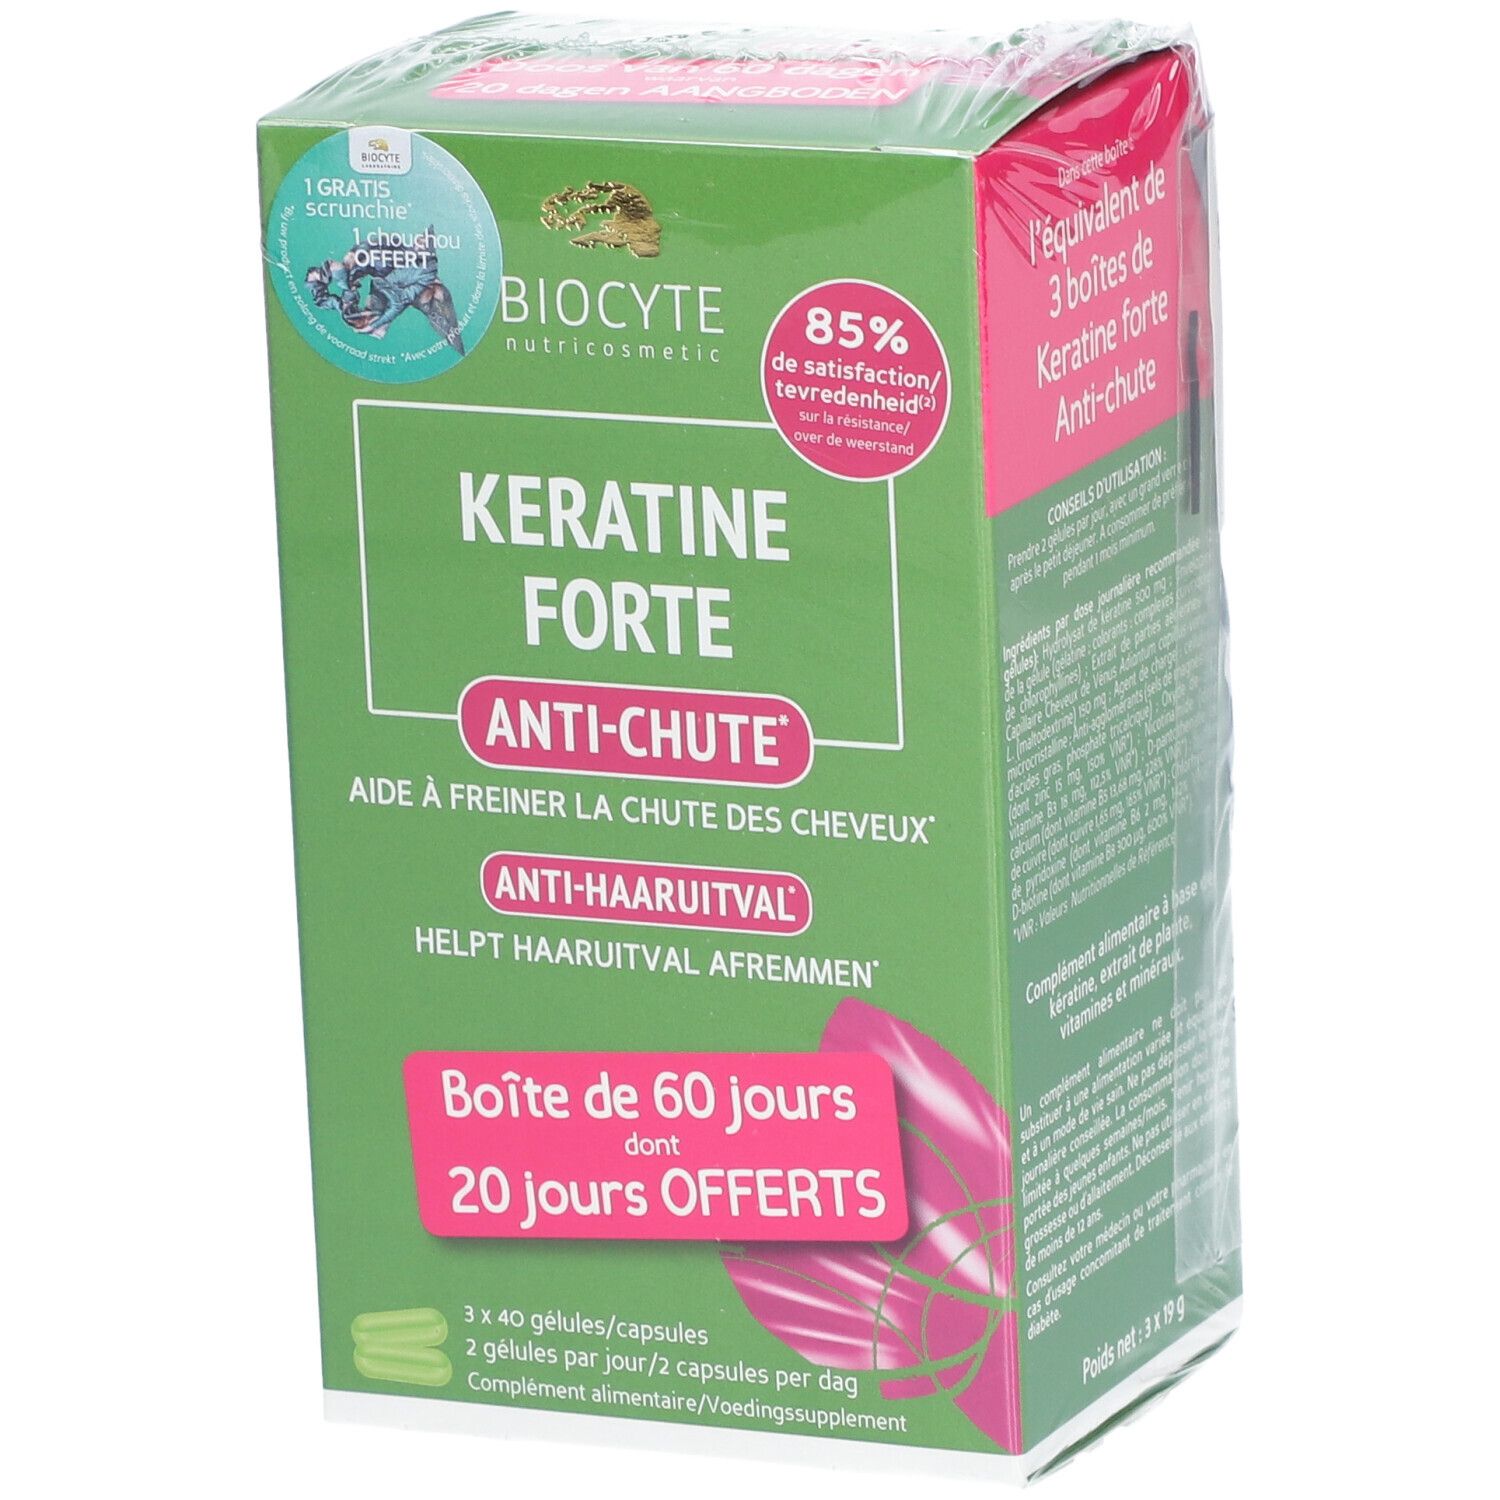 Biocyte Keratine Forte Anti-Chute